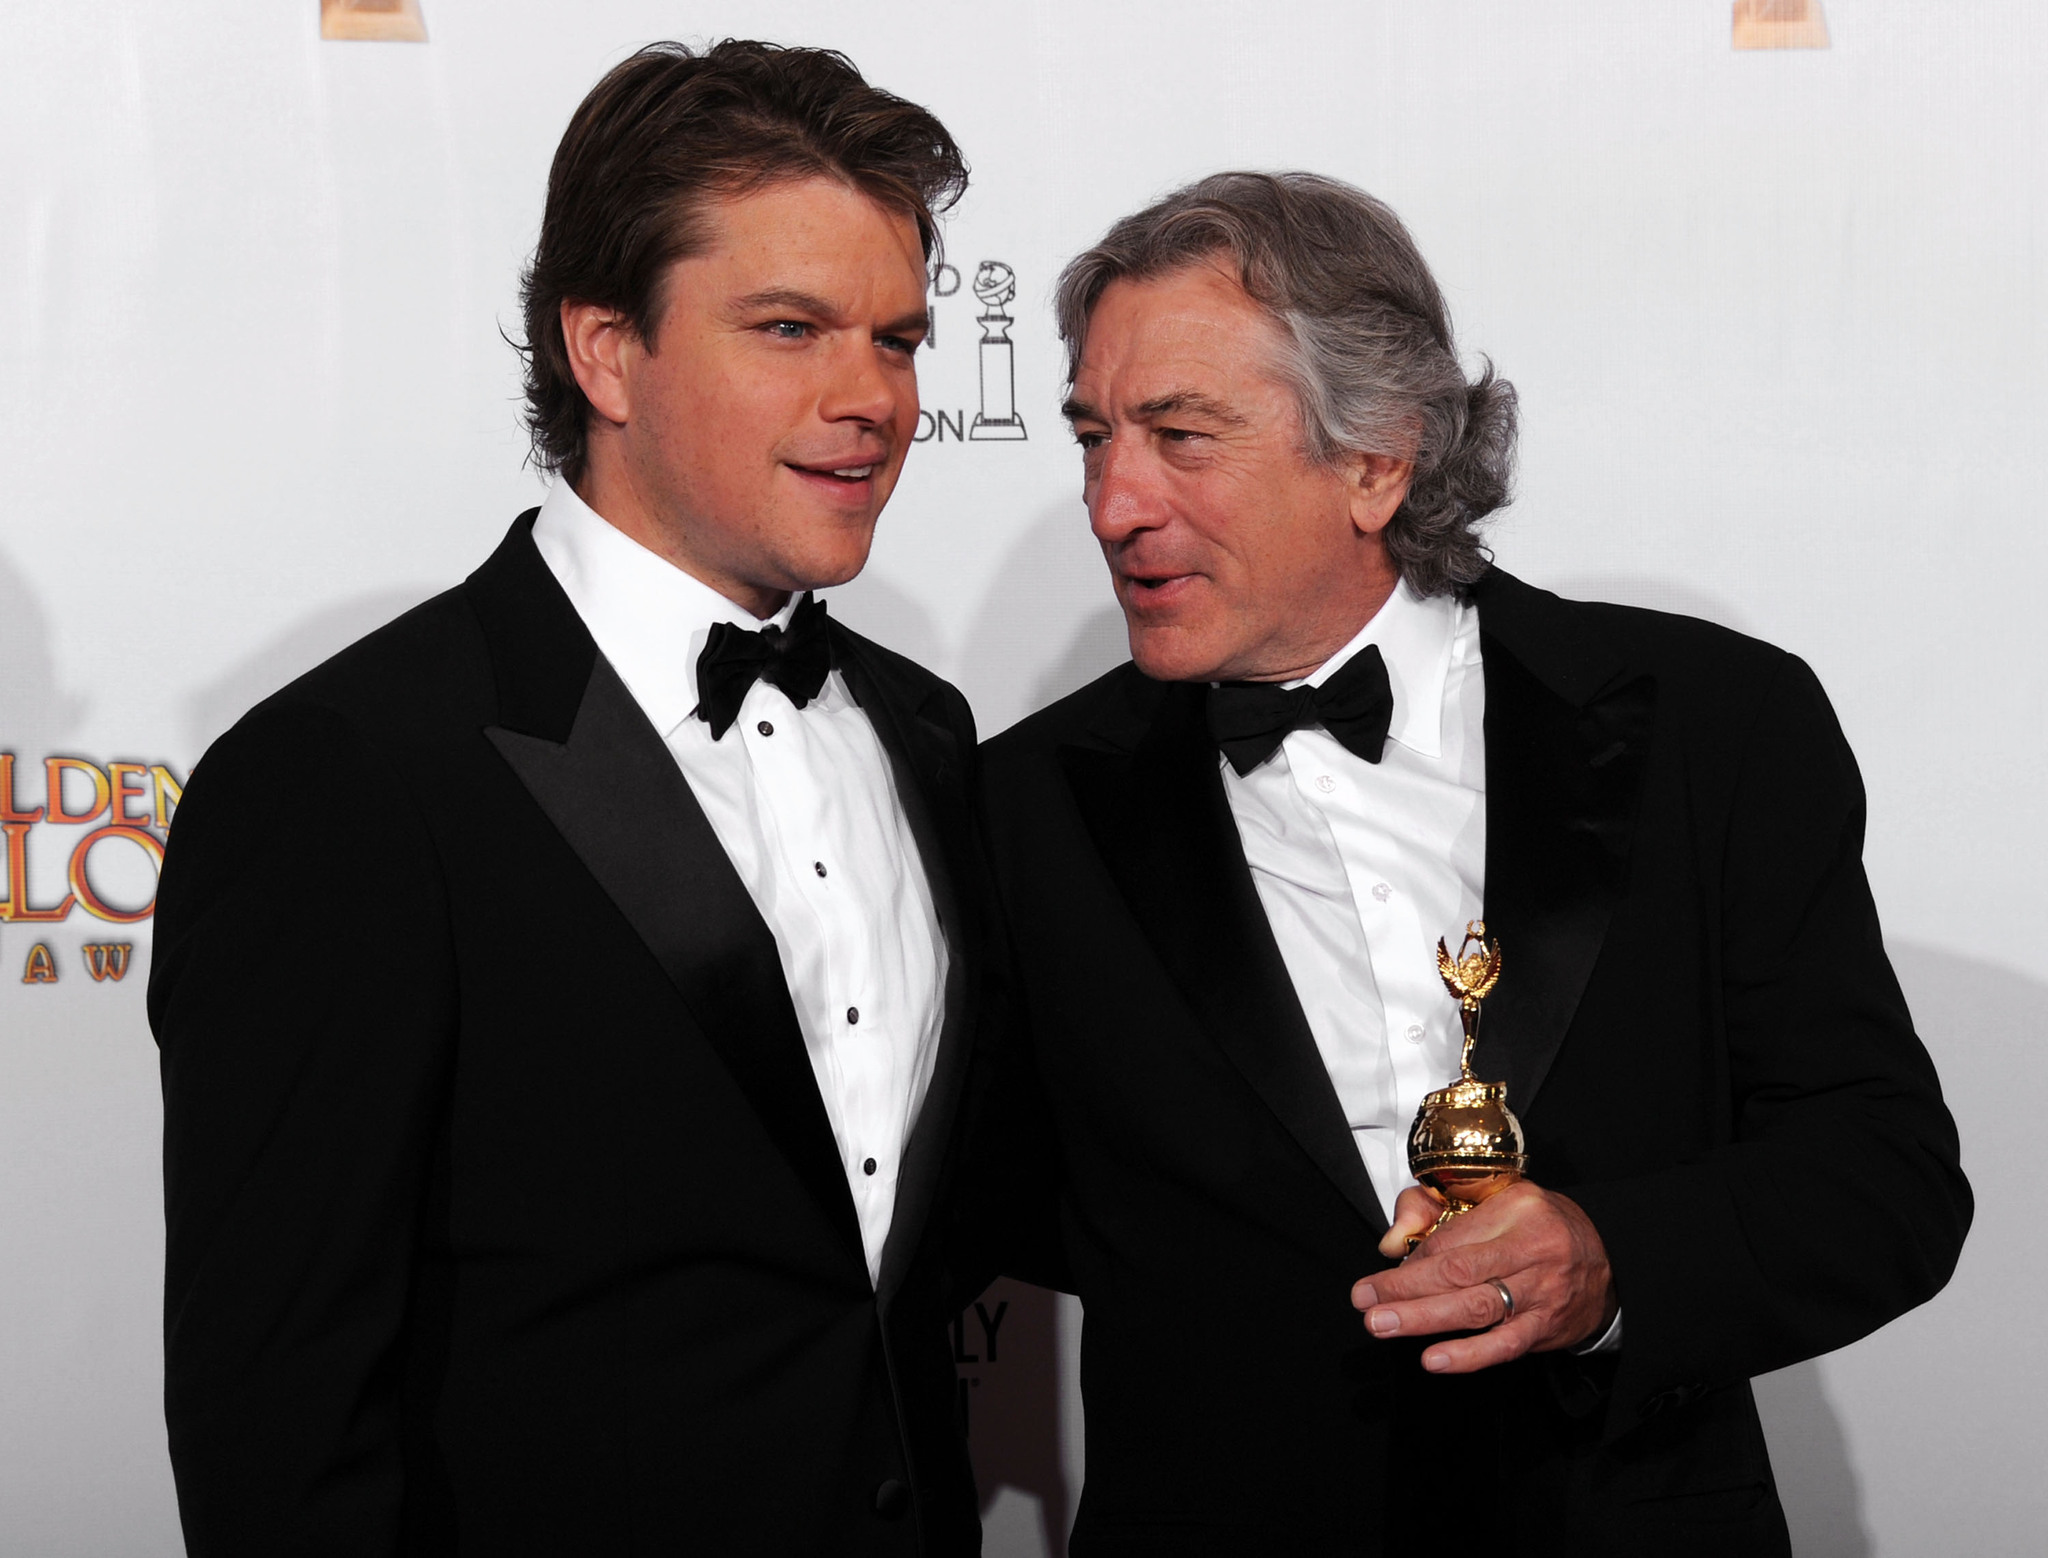 Robert De Niro and Matt Damon